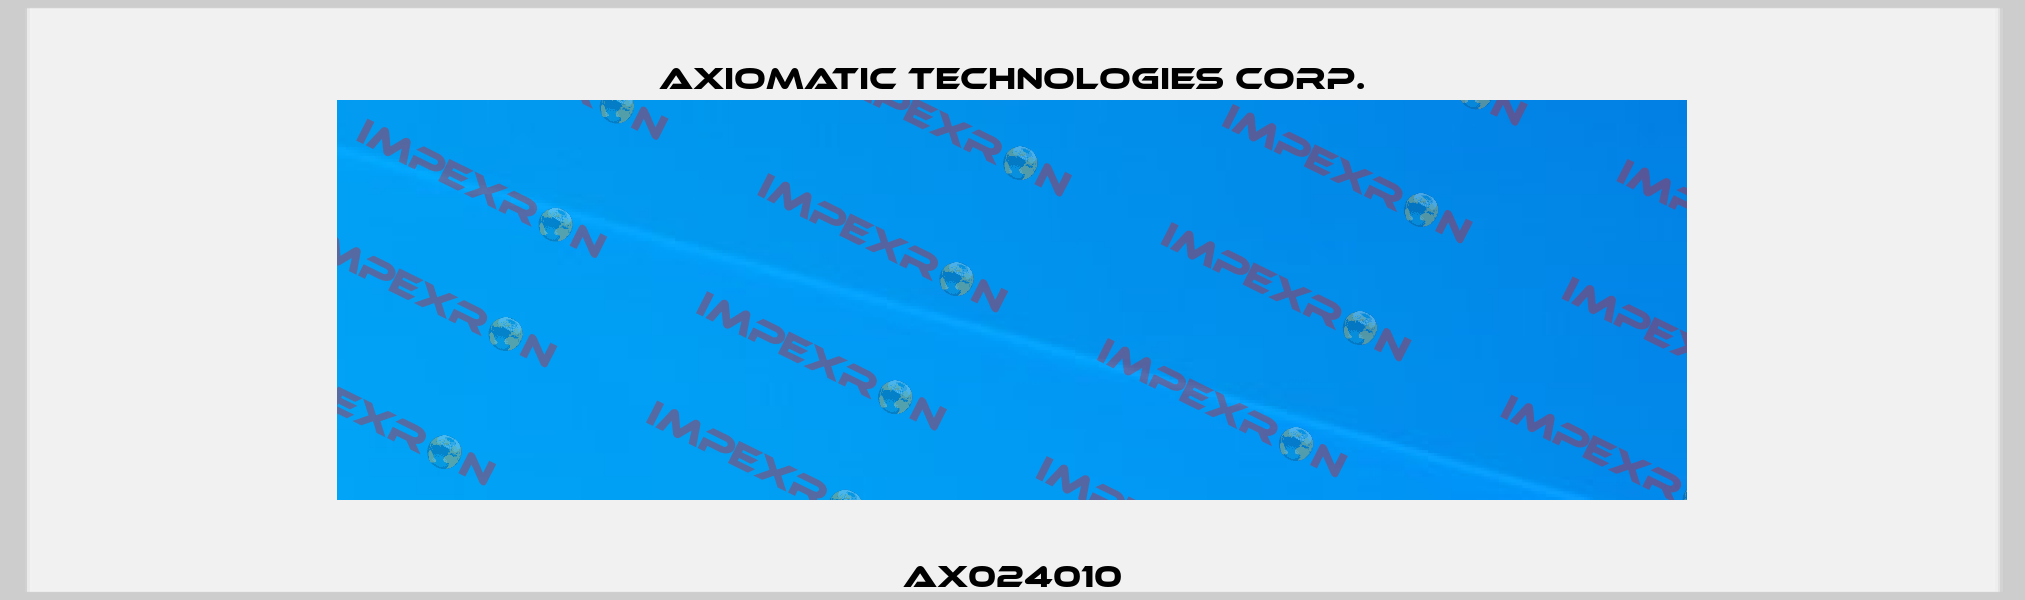 AX024010 Axiomatic Technologies Corp.